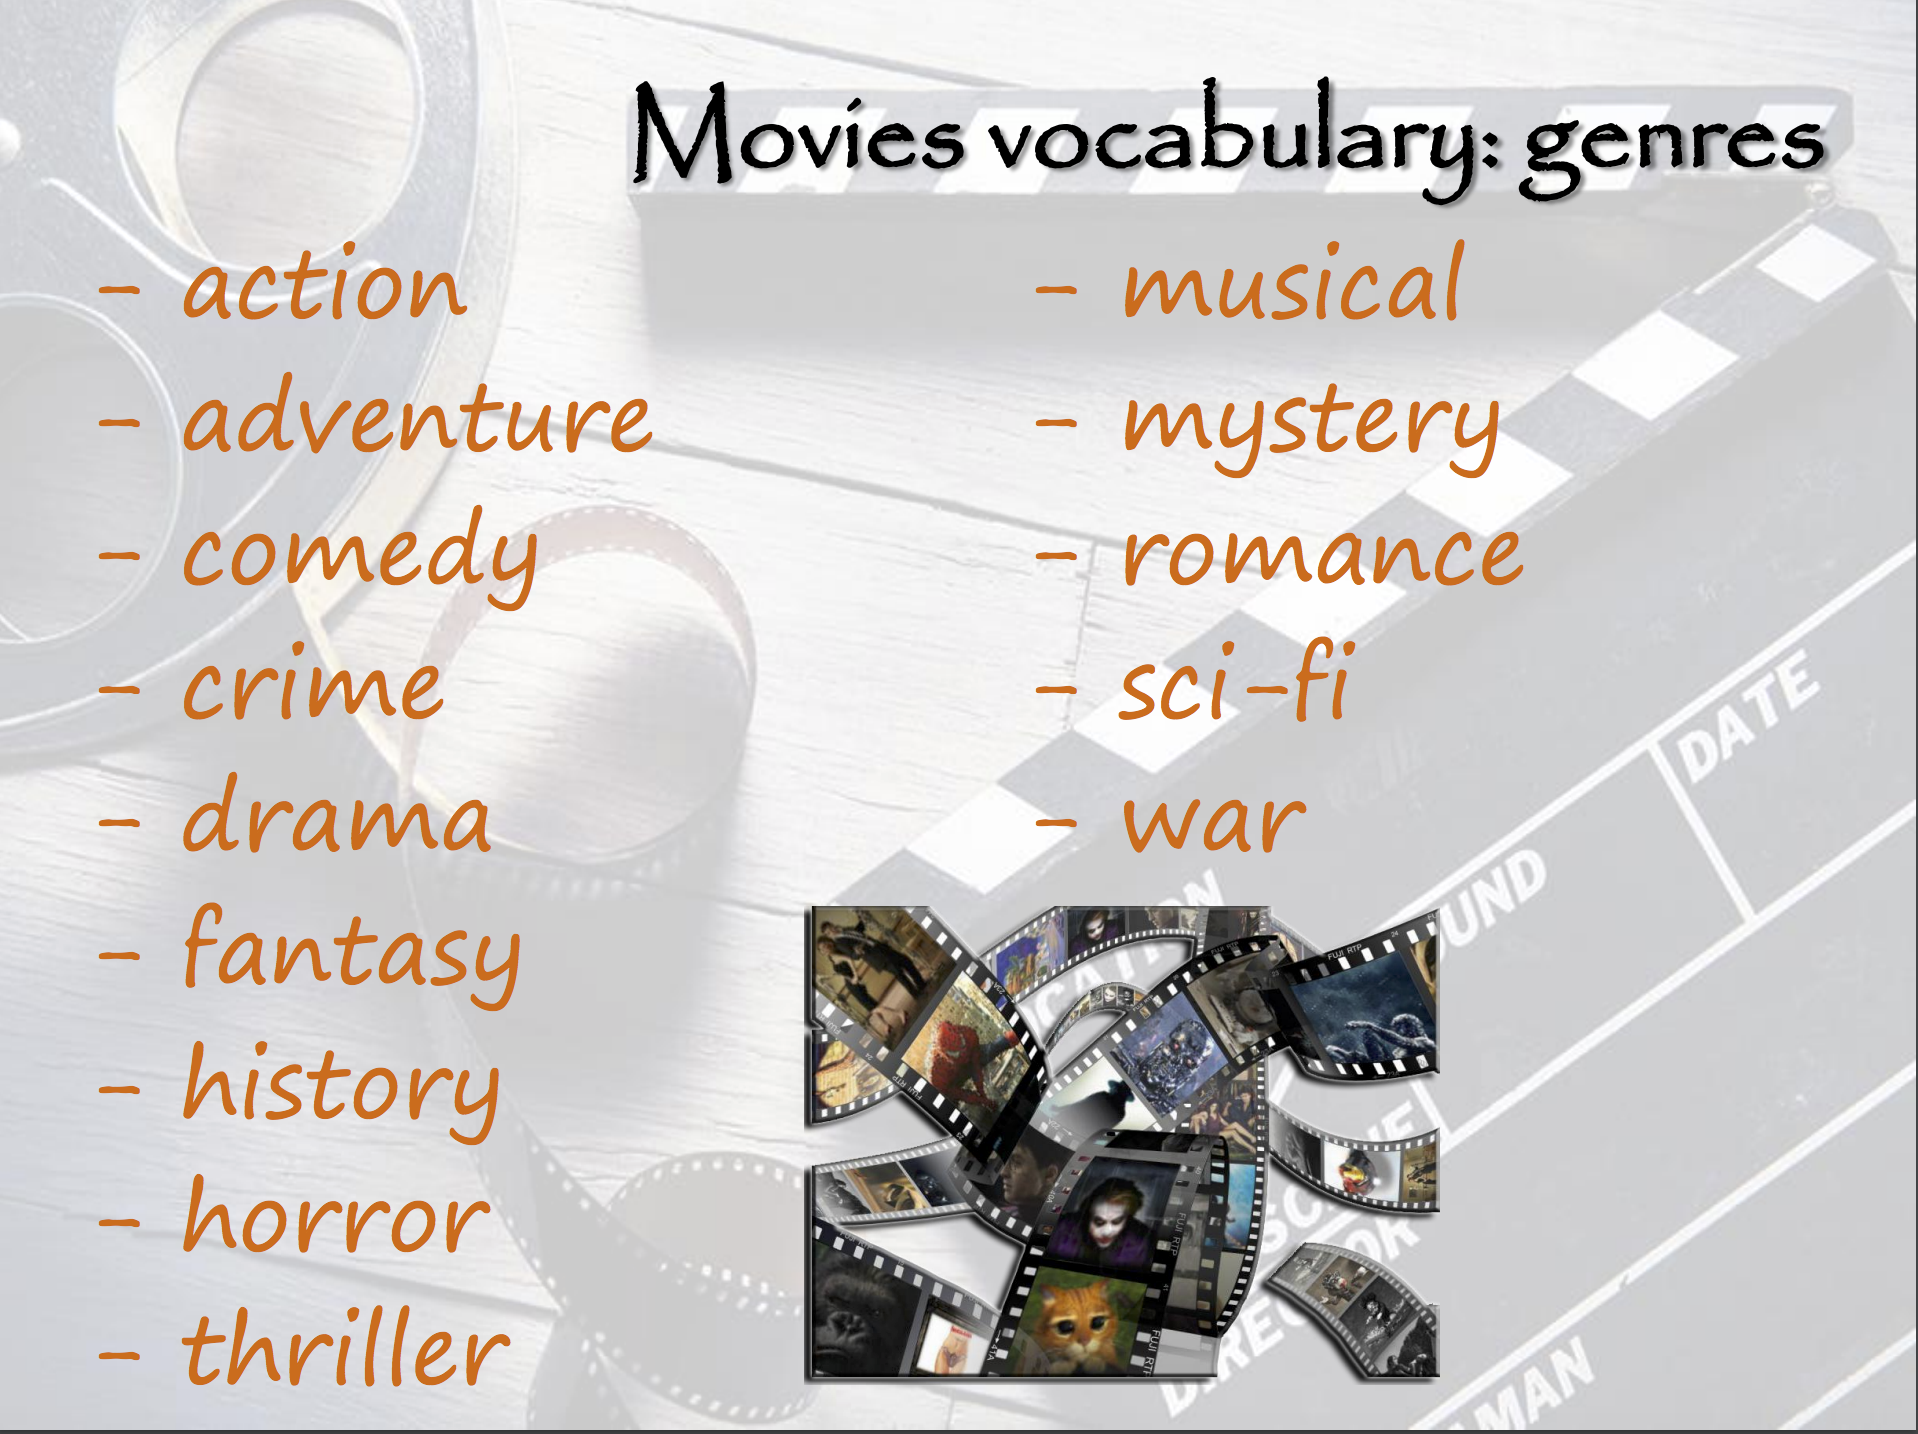 Types of movies. Movie вокабуляр.